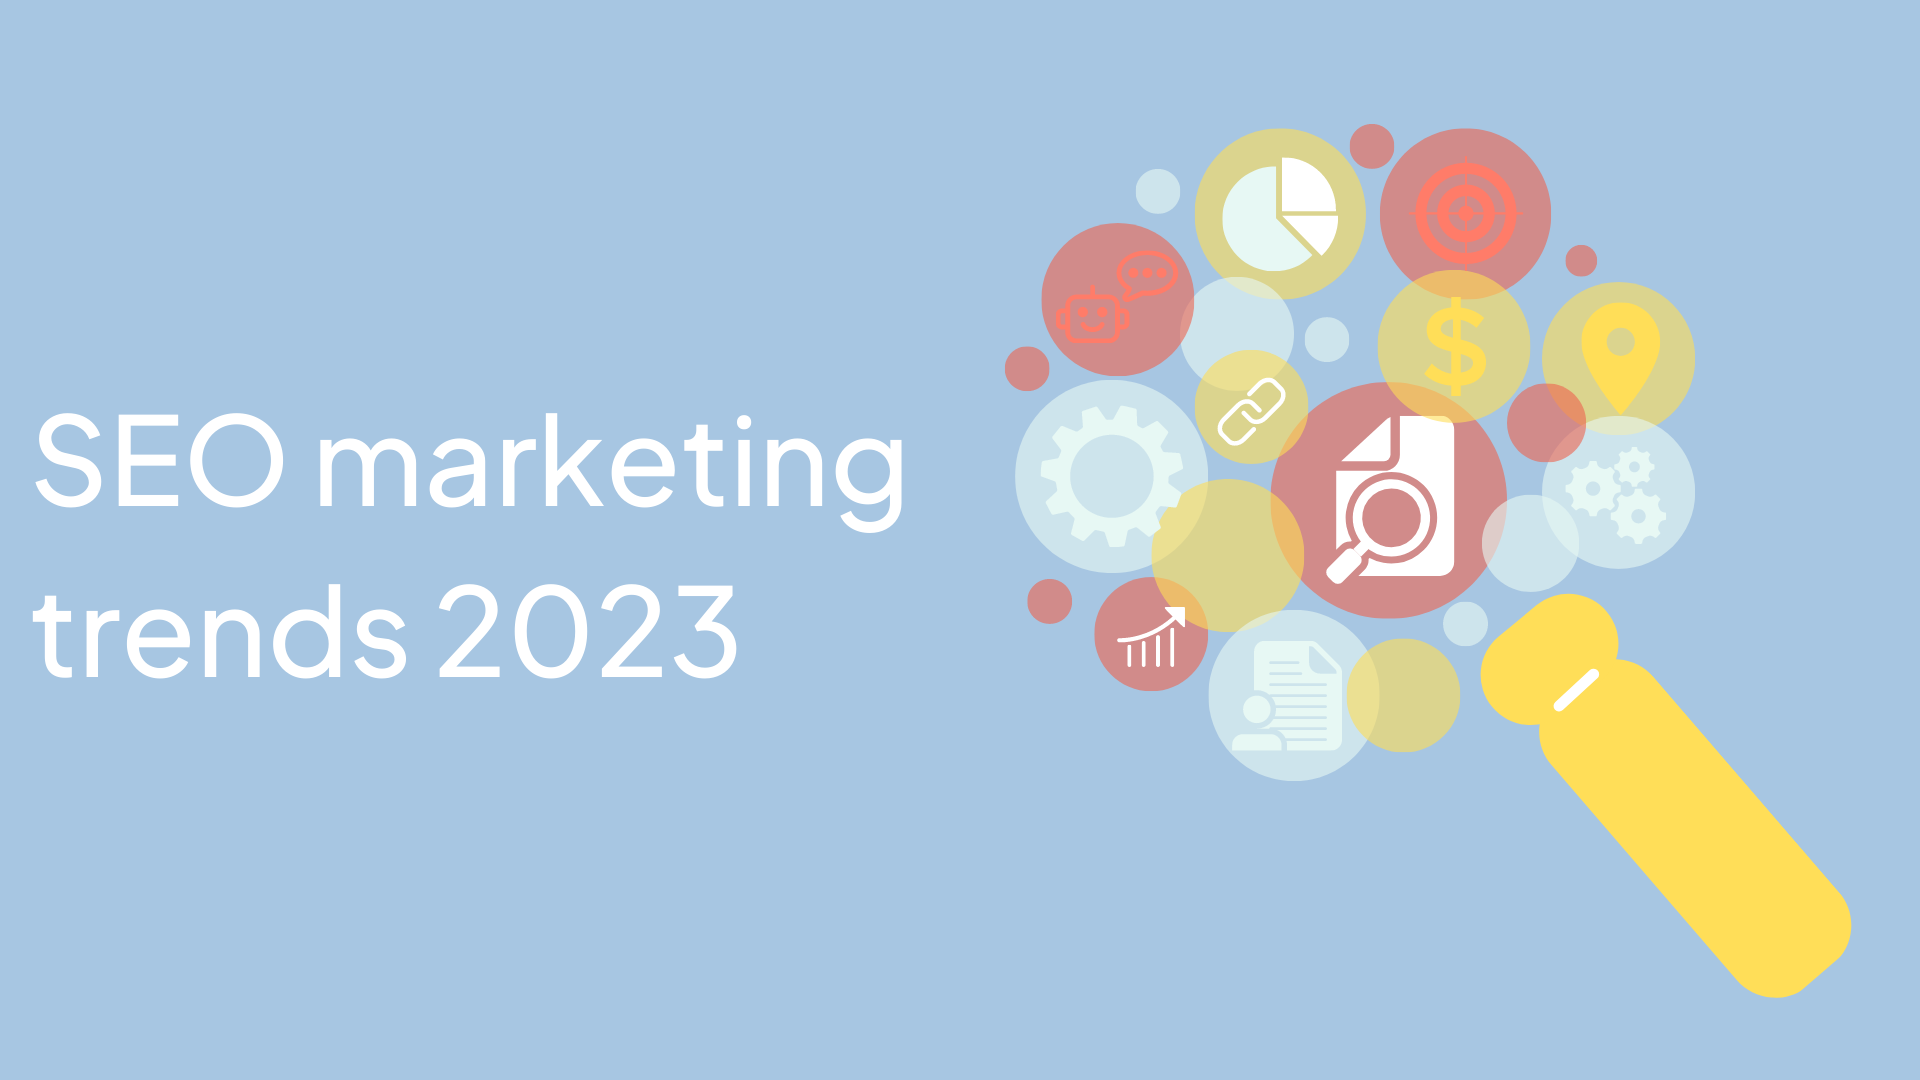 SEO marketing trends 2023